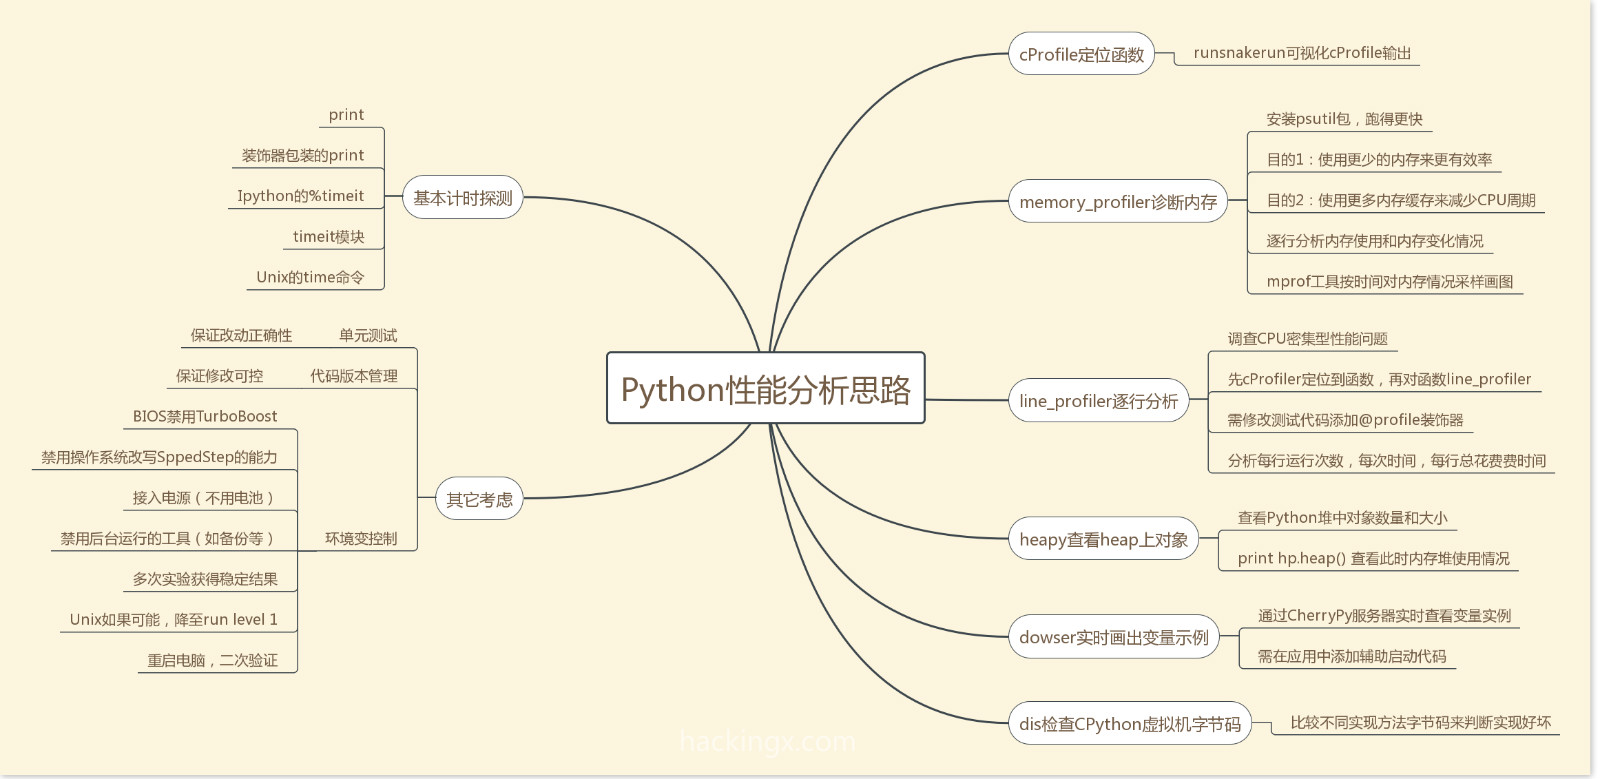 python-profile-thoughts.jpg